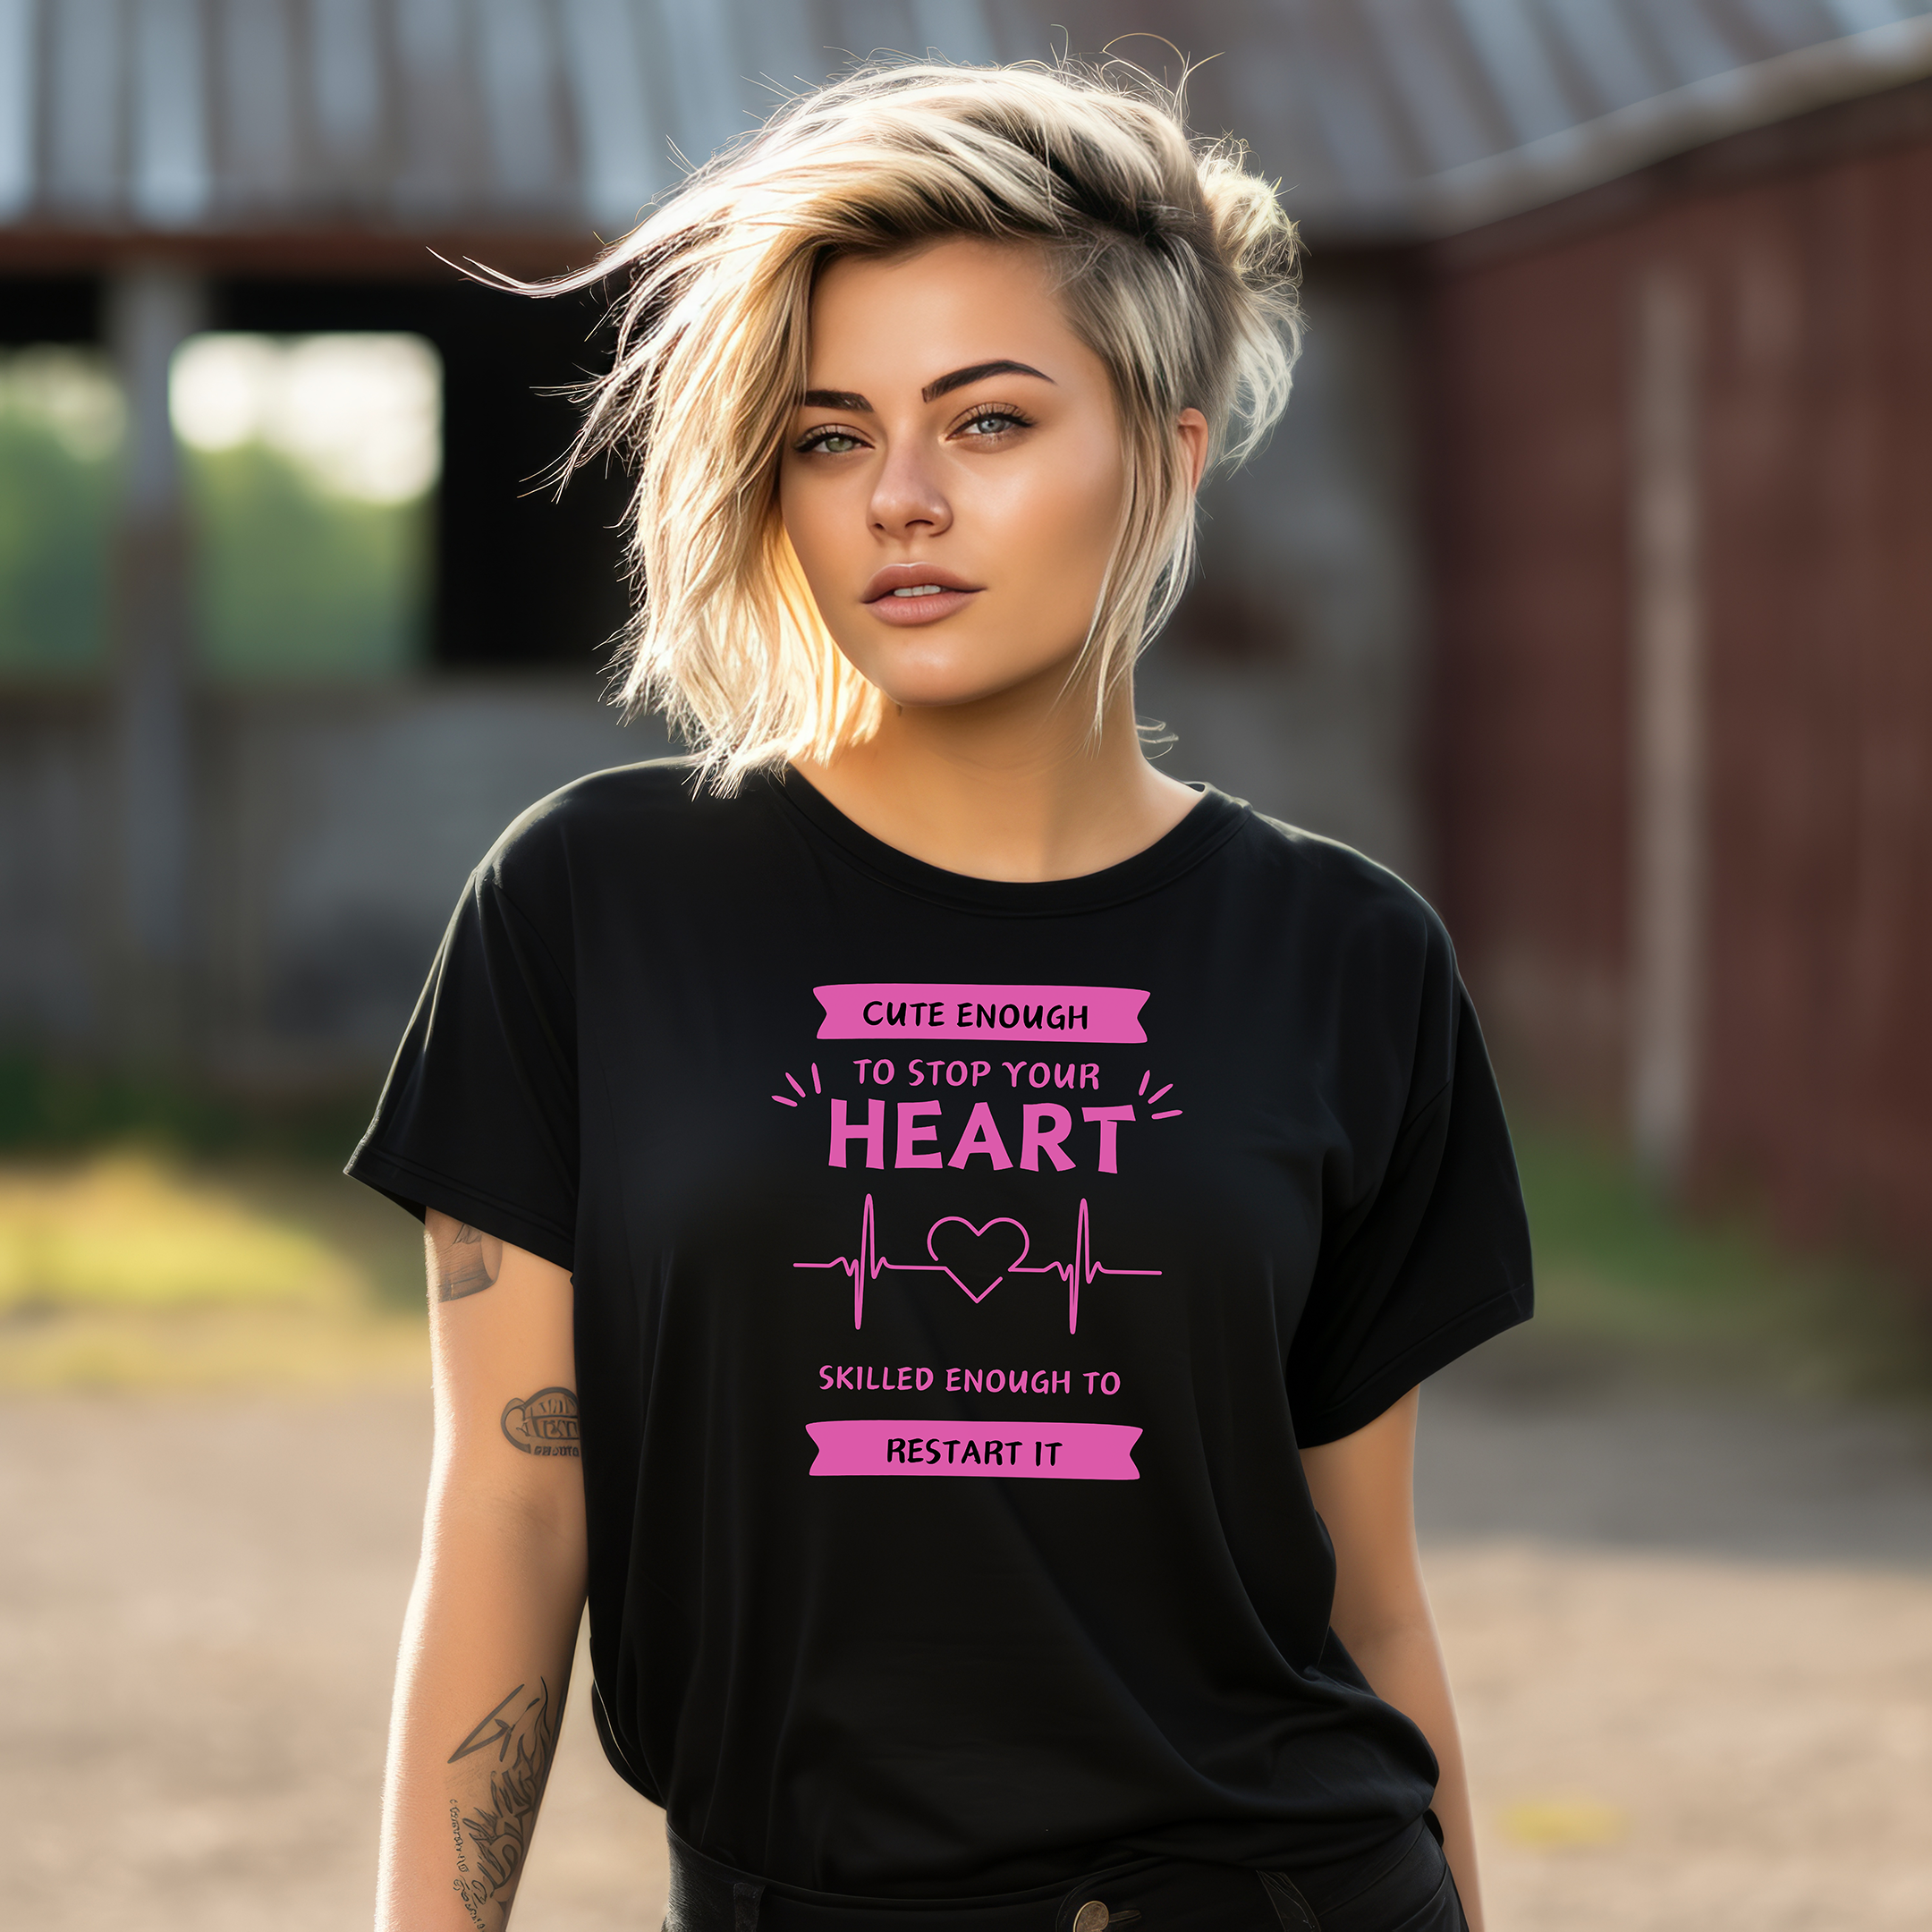 Heartstopper Nurse Tee - Cute & Skilled Statement Shirt